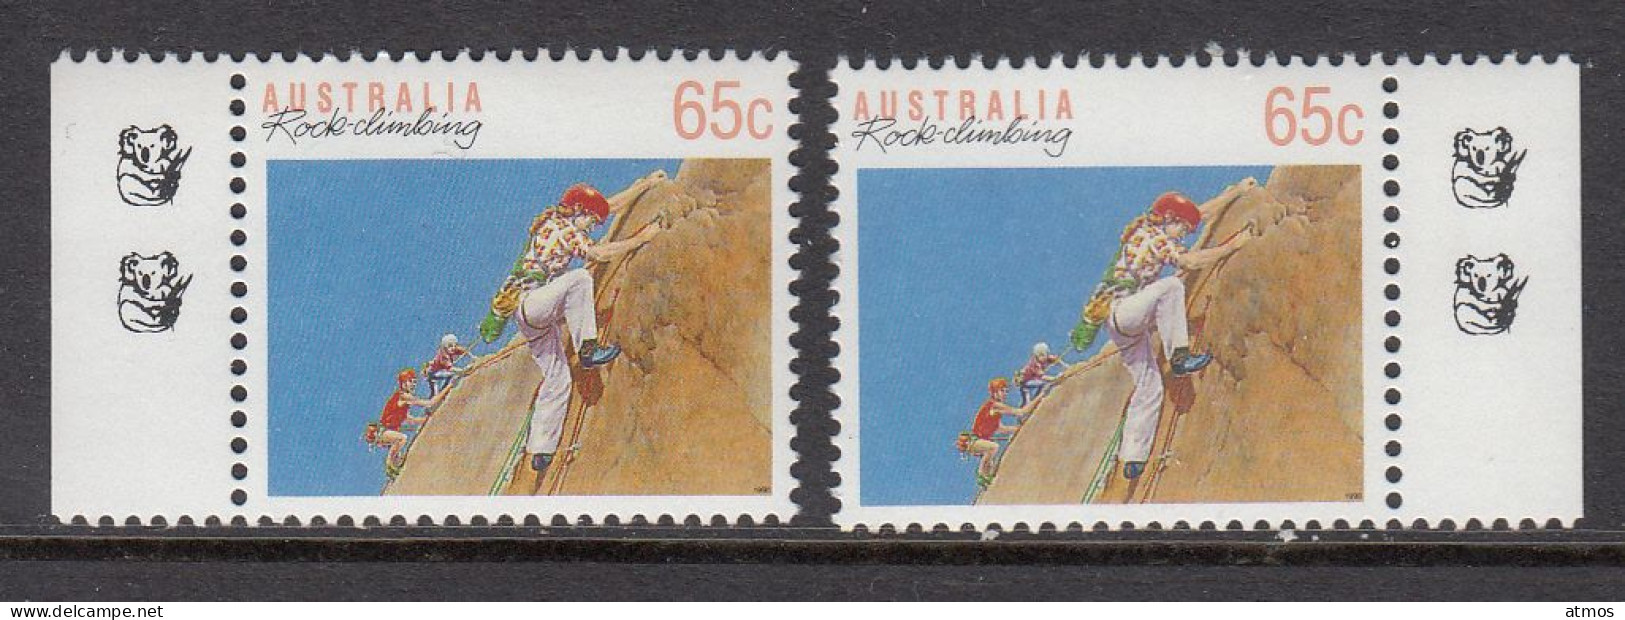 Australia MNH Michel Nr 1185 From 1990 Reprint 2 Koala - Mint Stamps